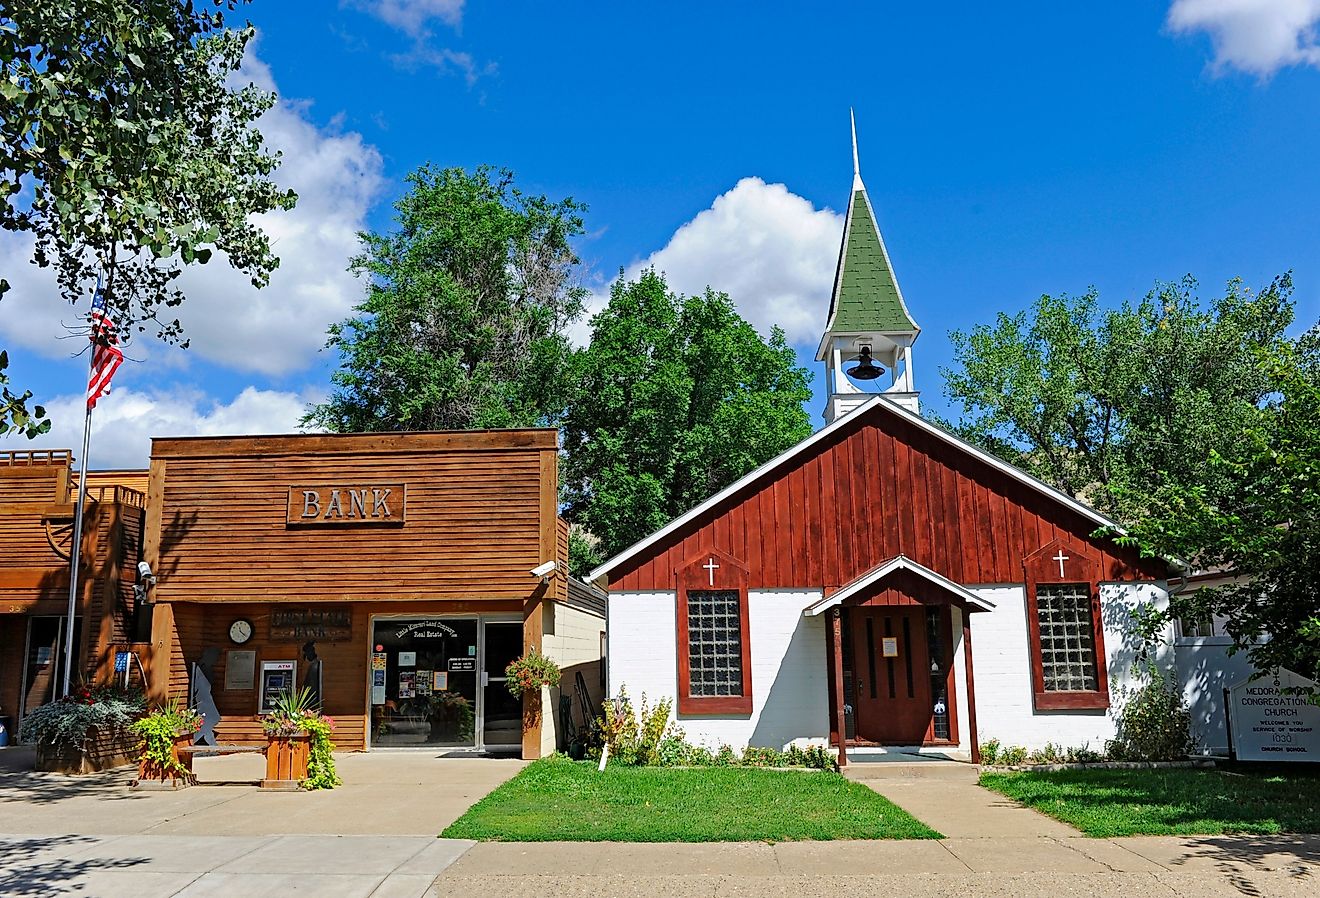 Church and bank in Medora, North Dakota. Image credit Dennis MacDonald via Shutterstock.